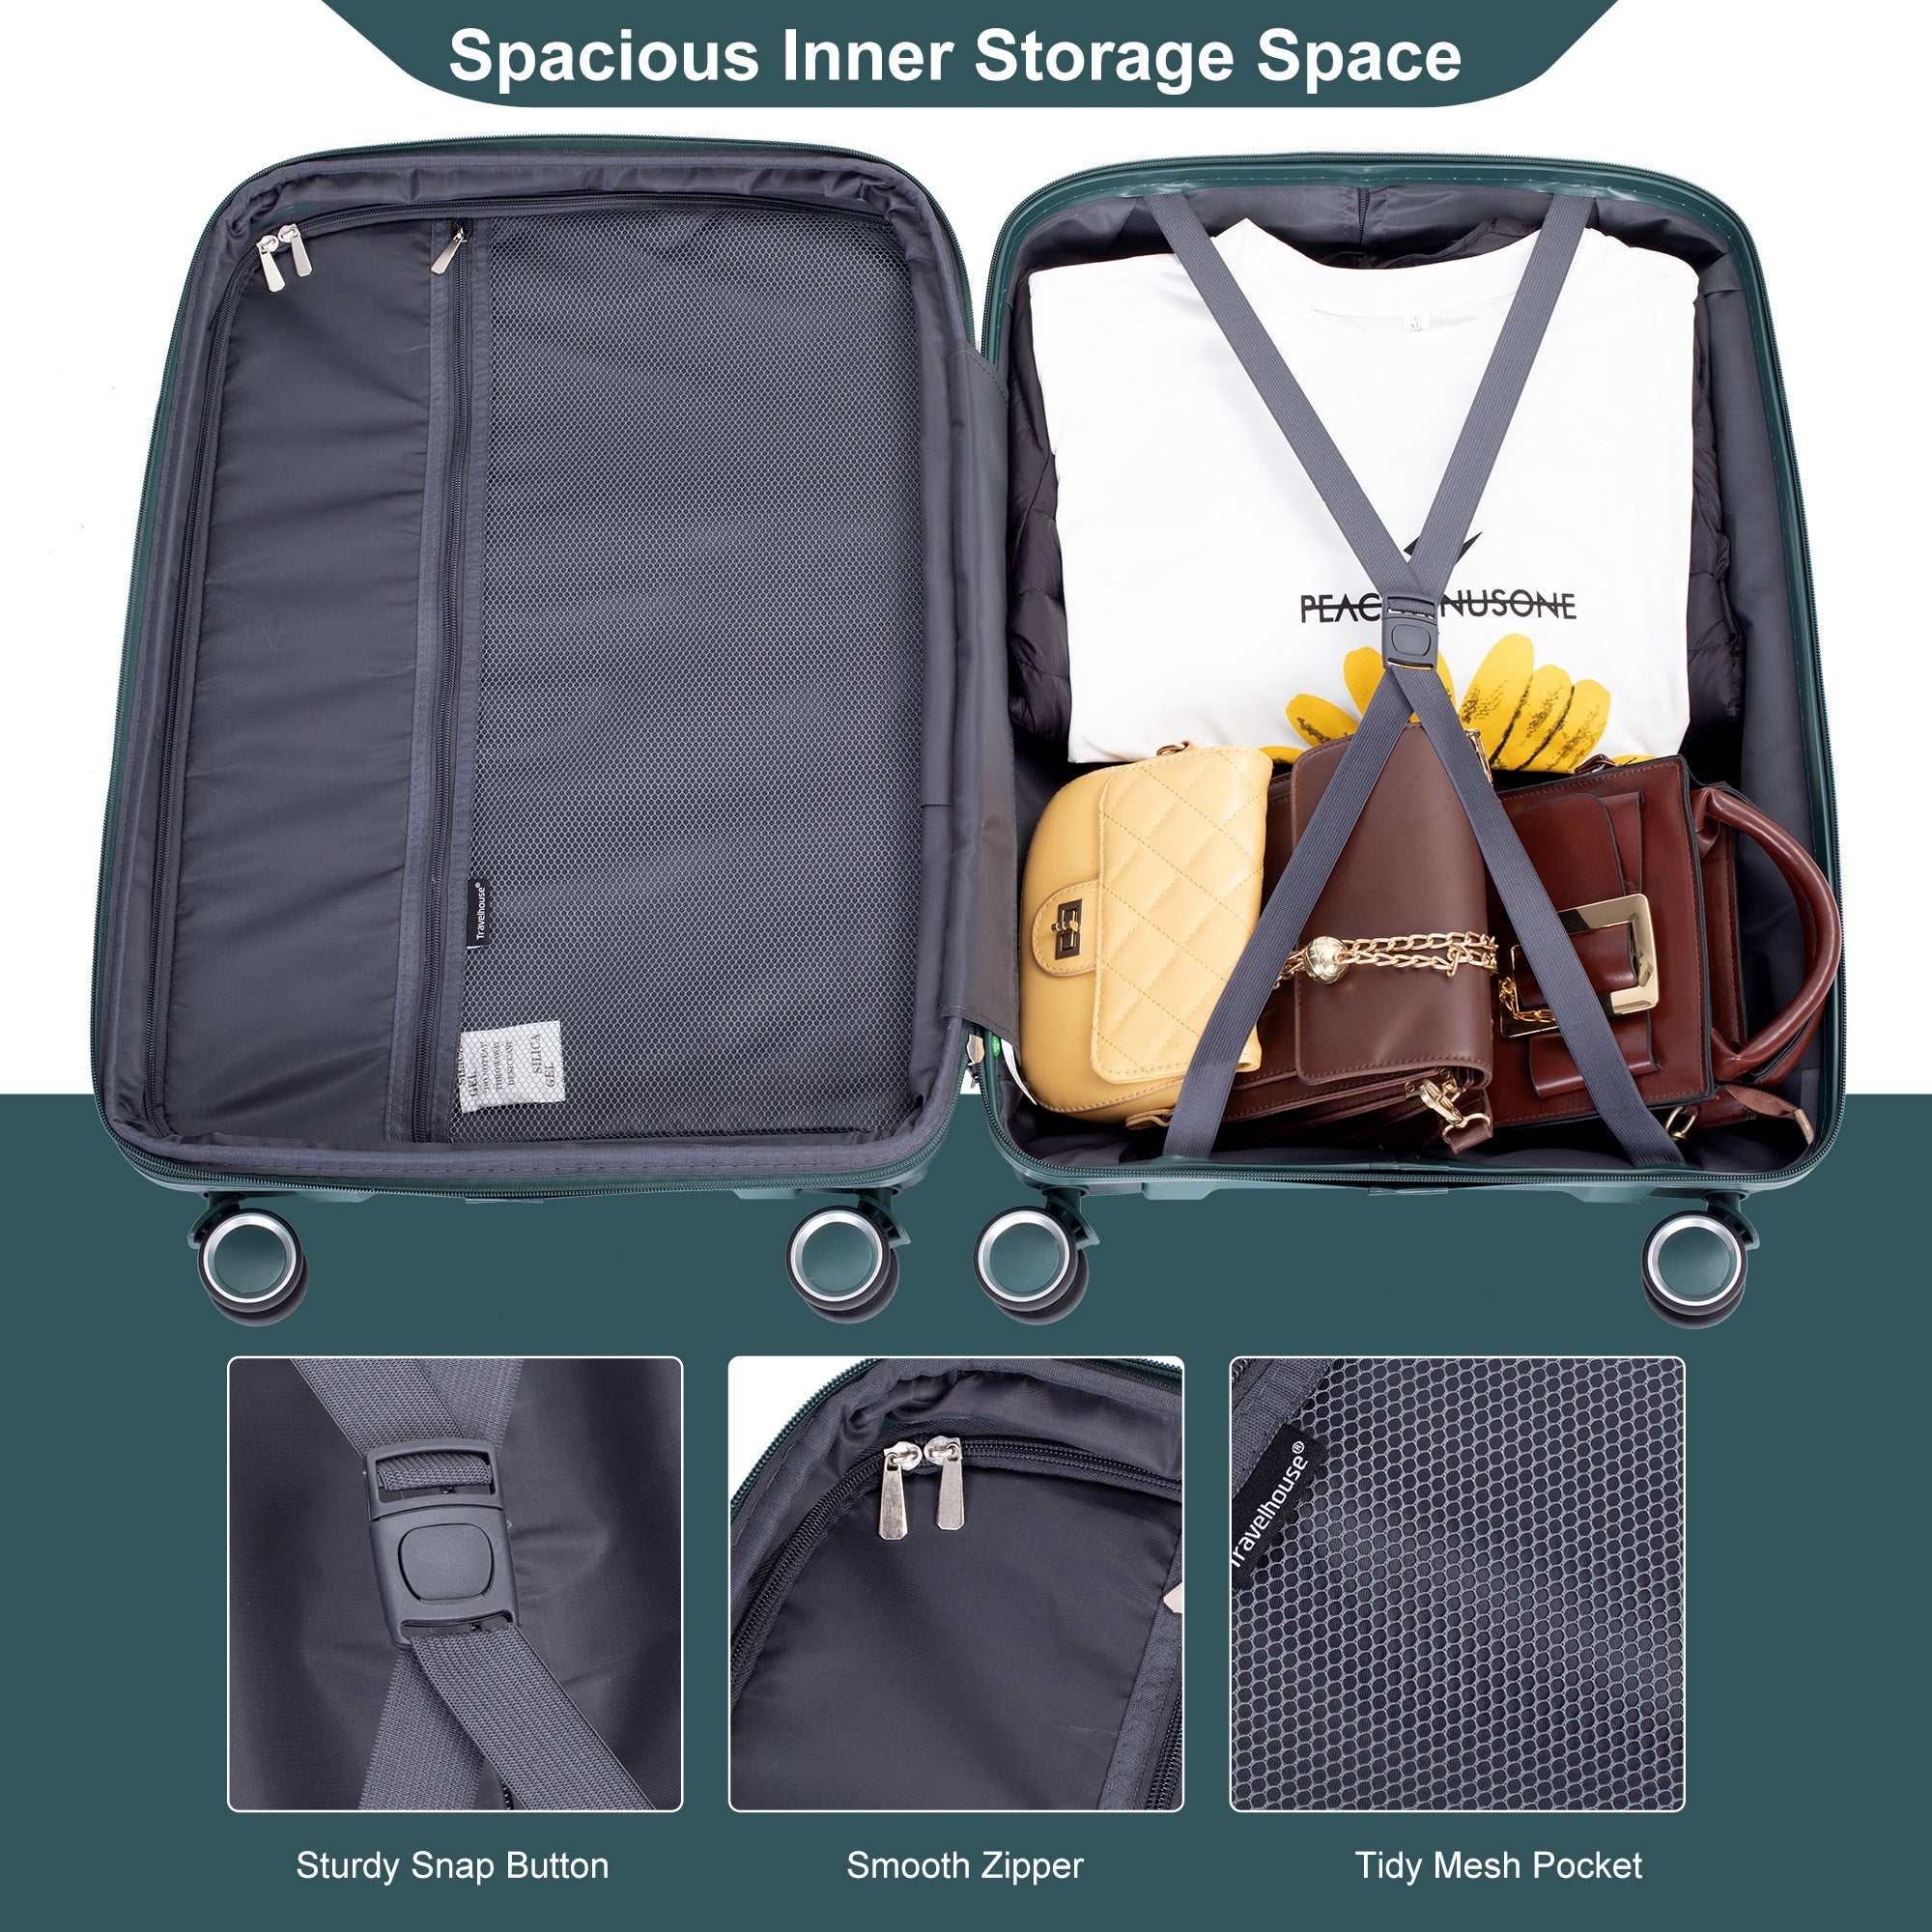 Expandable Hardshell Suitcase Double Spinner Wheels PP green-polypropylene